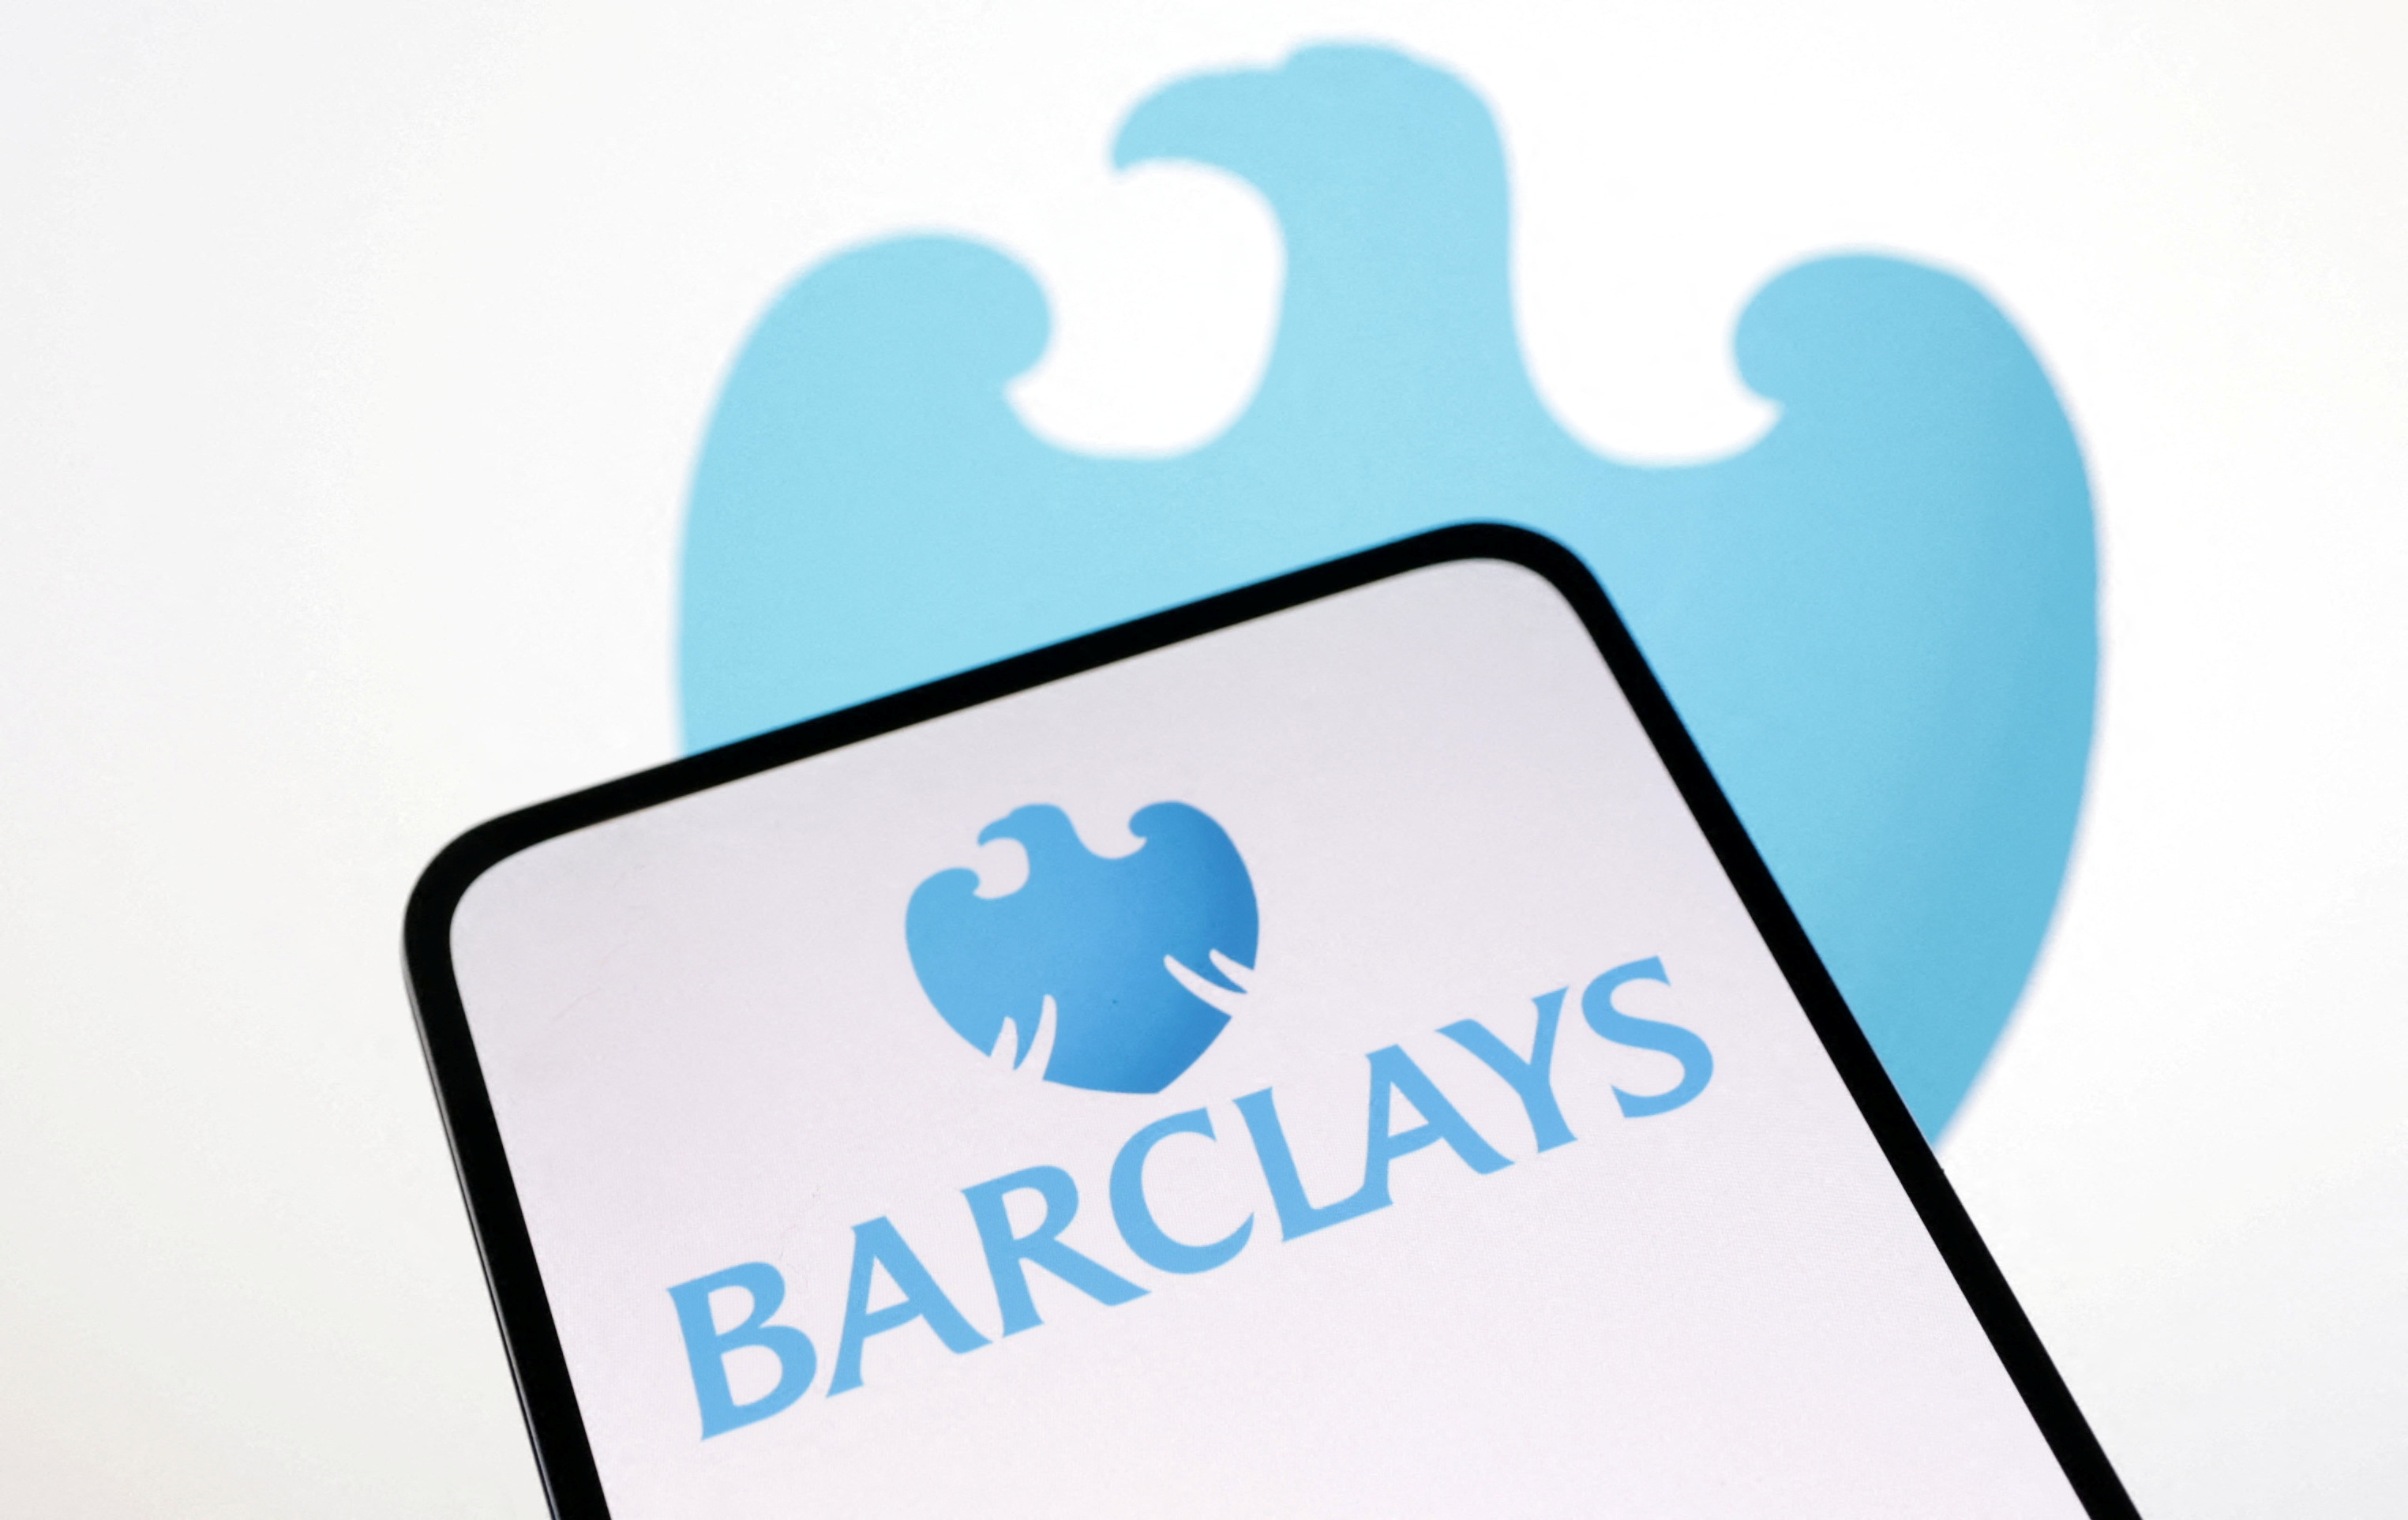 Has Barclays got a problem?